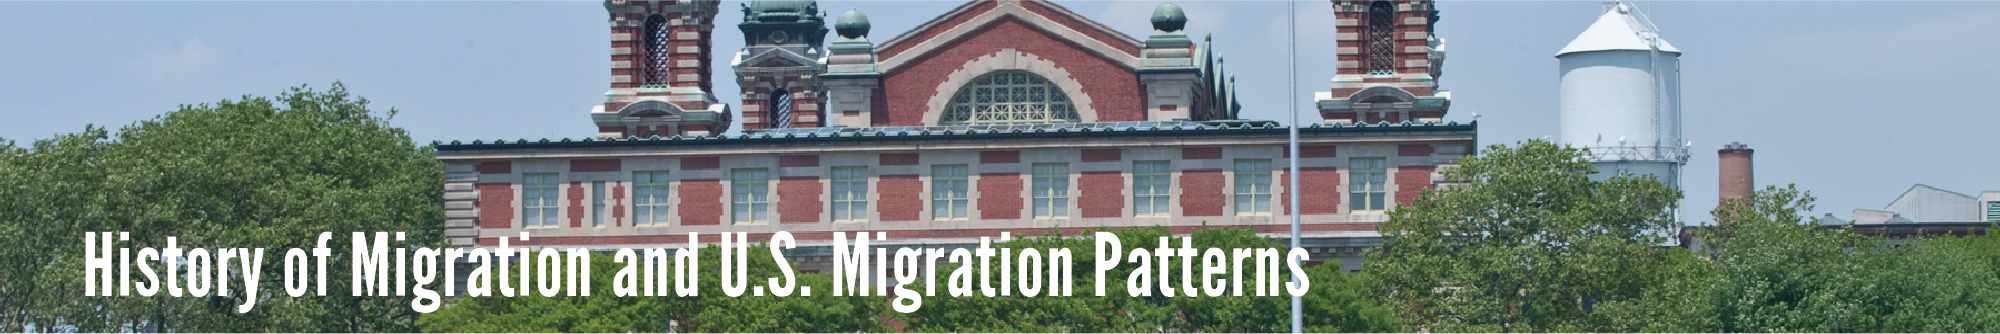 Migration History